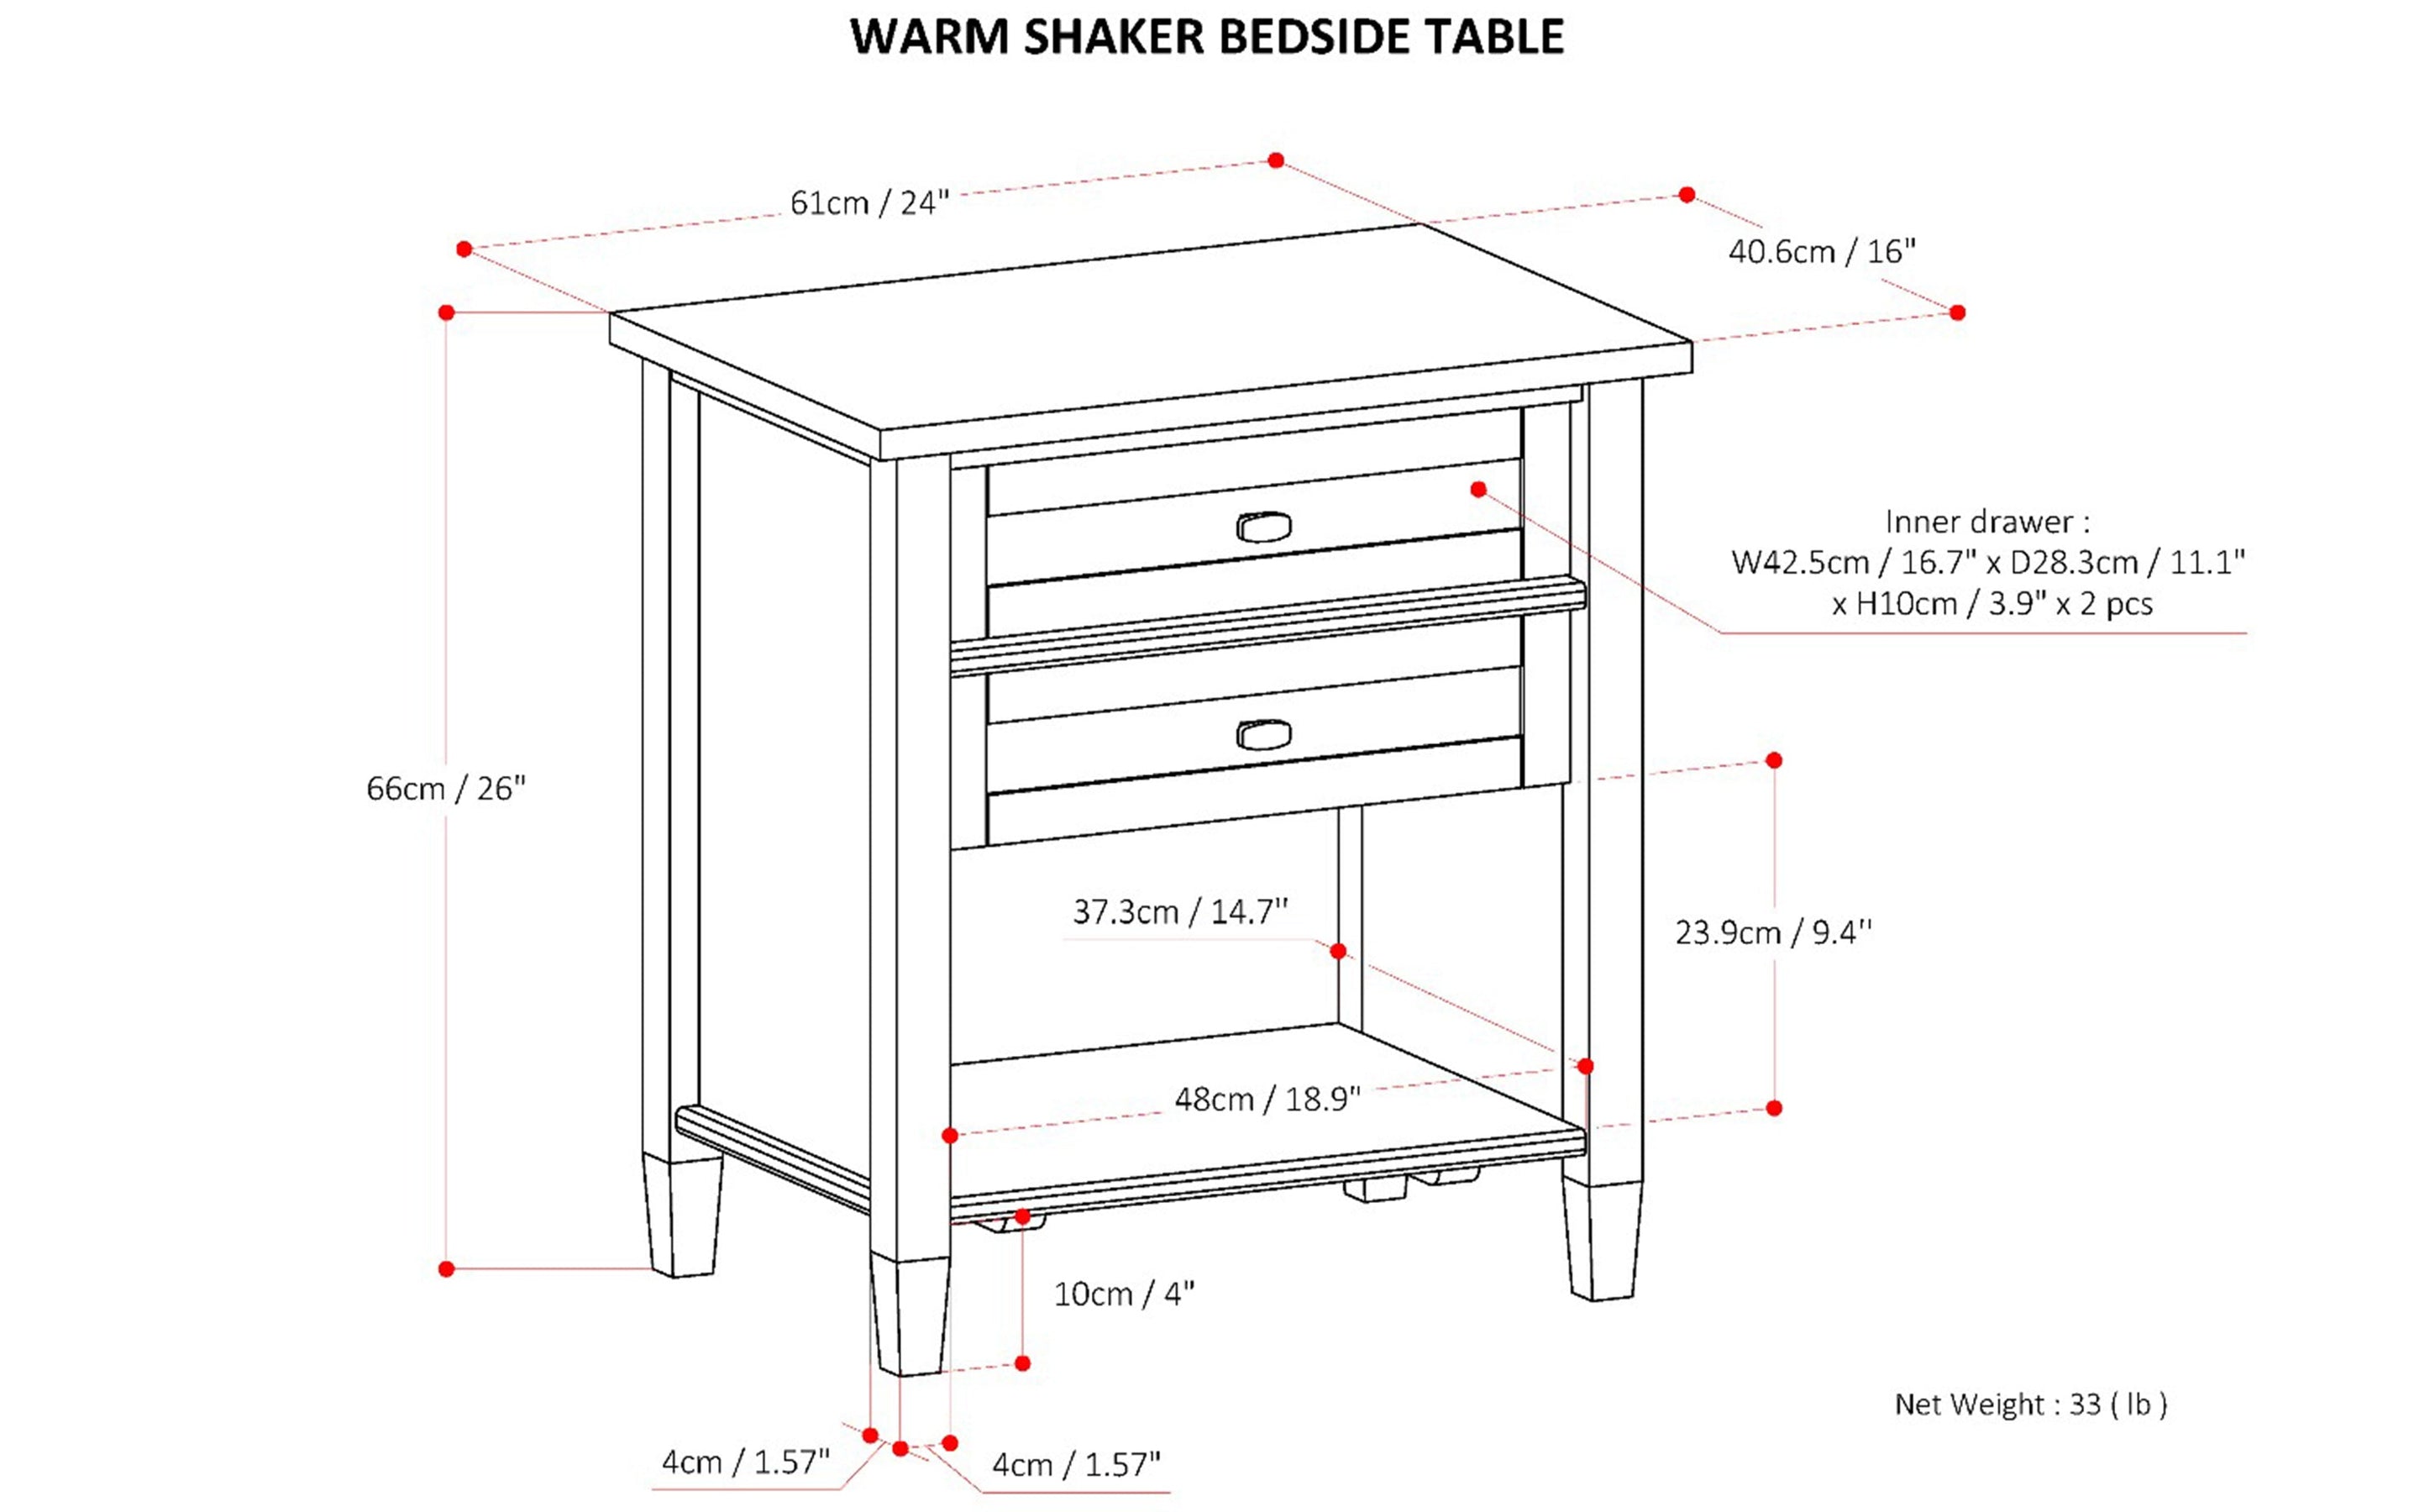 Russet Brown | Warm Shaker Bedside Table